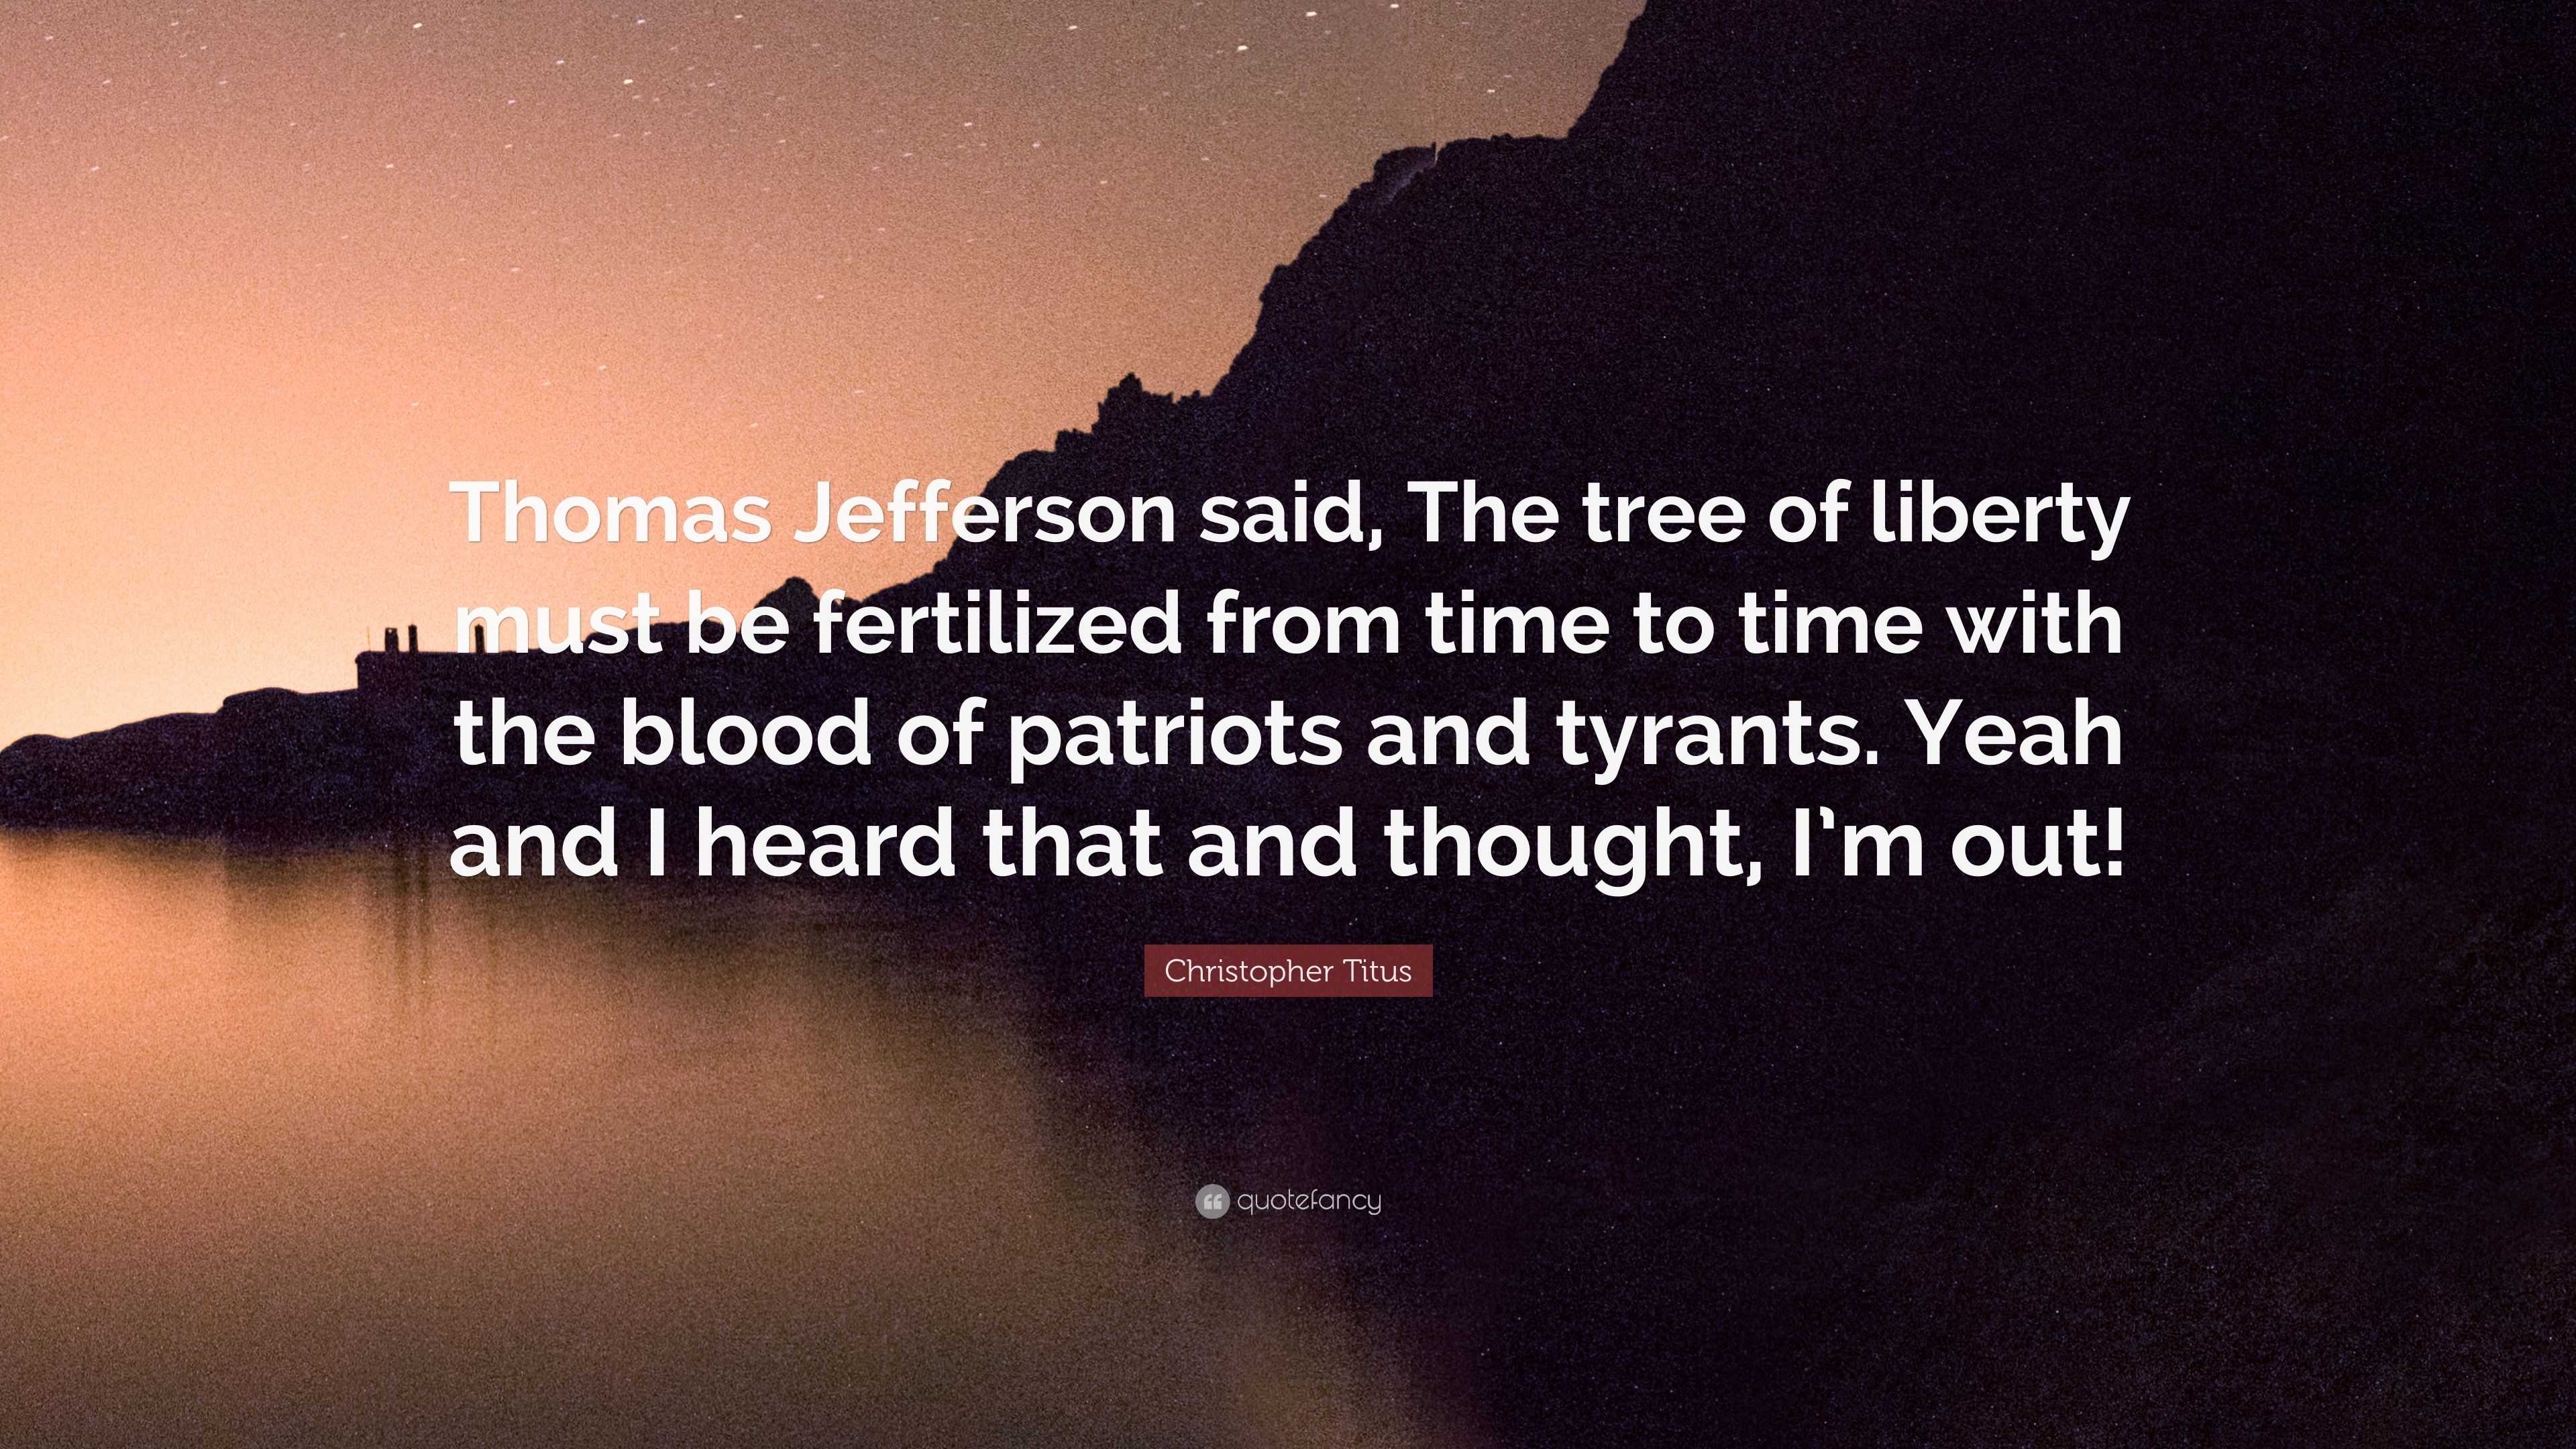 Christopher Titus Quote “Thomas Jefferson said, The tree of liberty